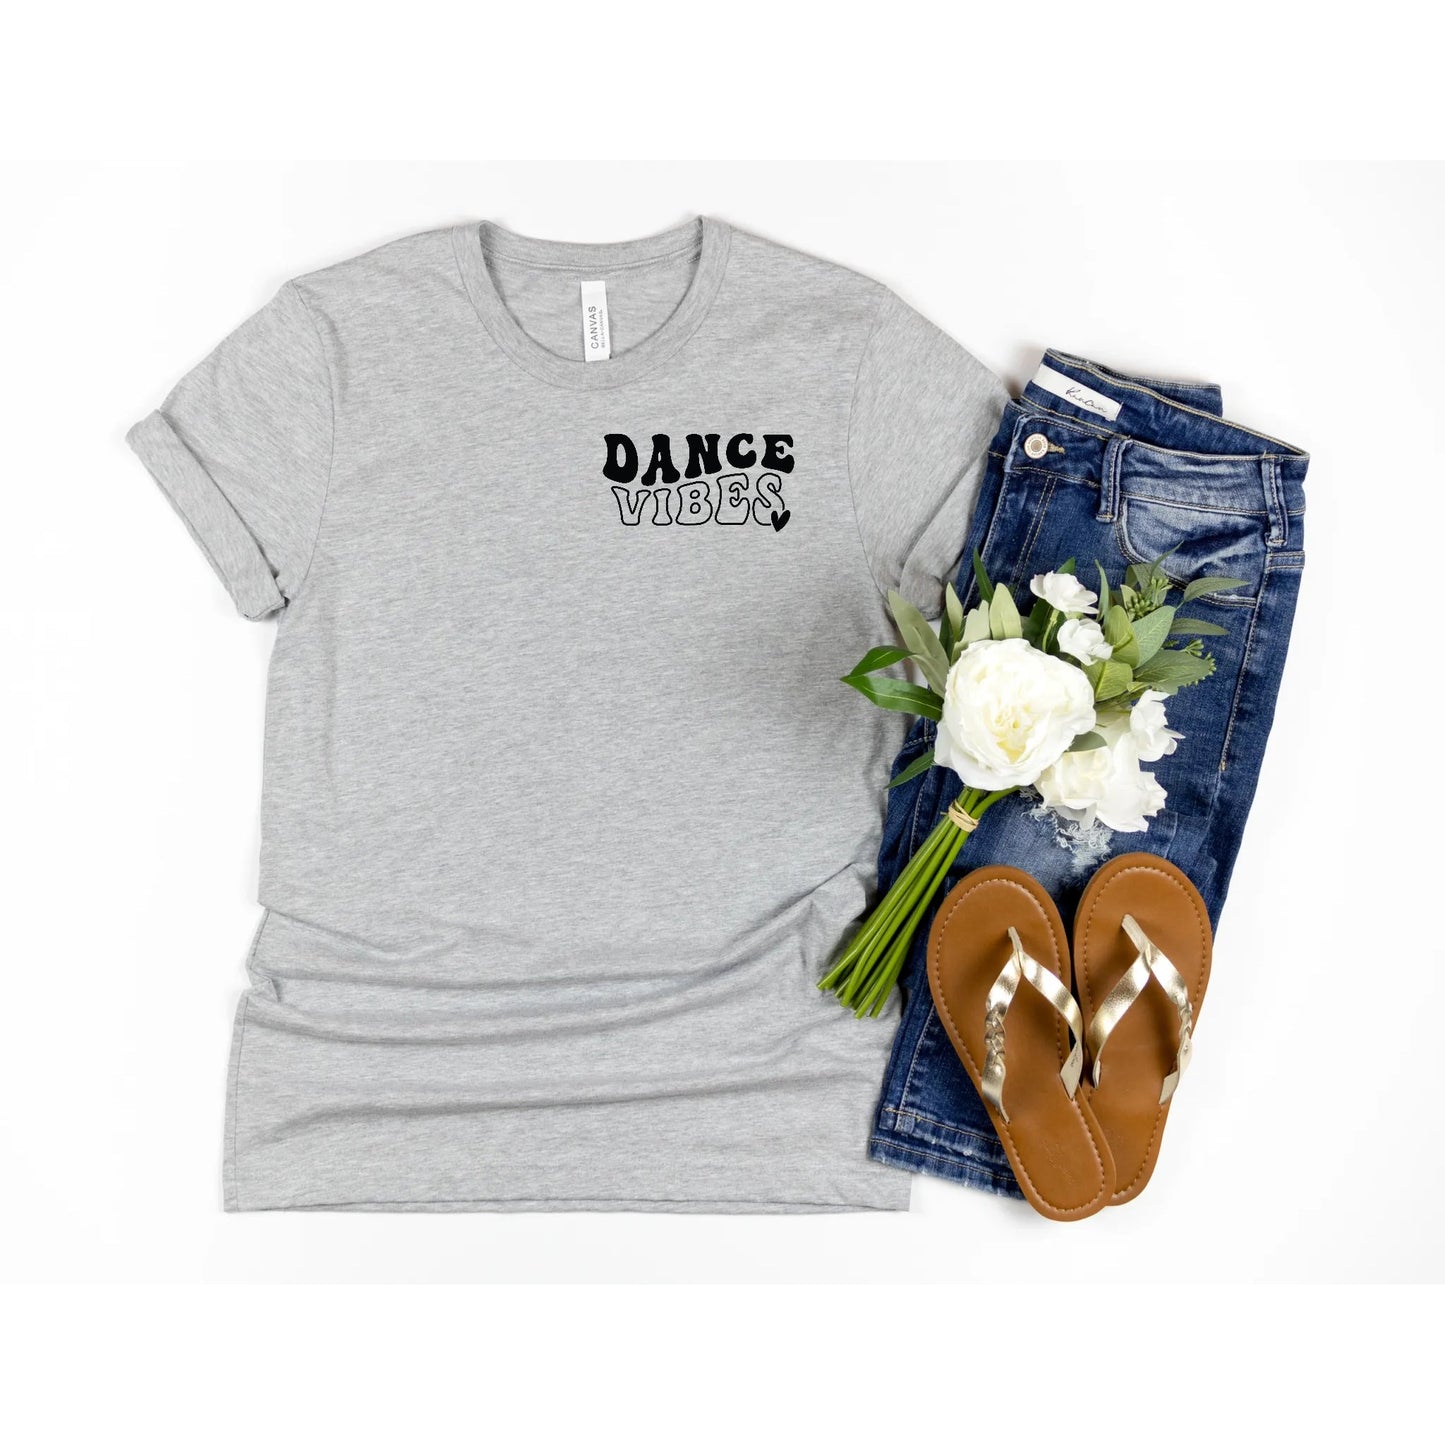 Dance Mom Shirt,Dance Squad,Dance Mom Crew Shirt,Mom Life,Dance Mama T-Shirt,Cute Gift for Dance Mom, Mothers Day Gift,Mom Tee,Dance - Premium T-Shirt - Just $21.50! Shop now at Nine Thirty Nine Design